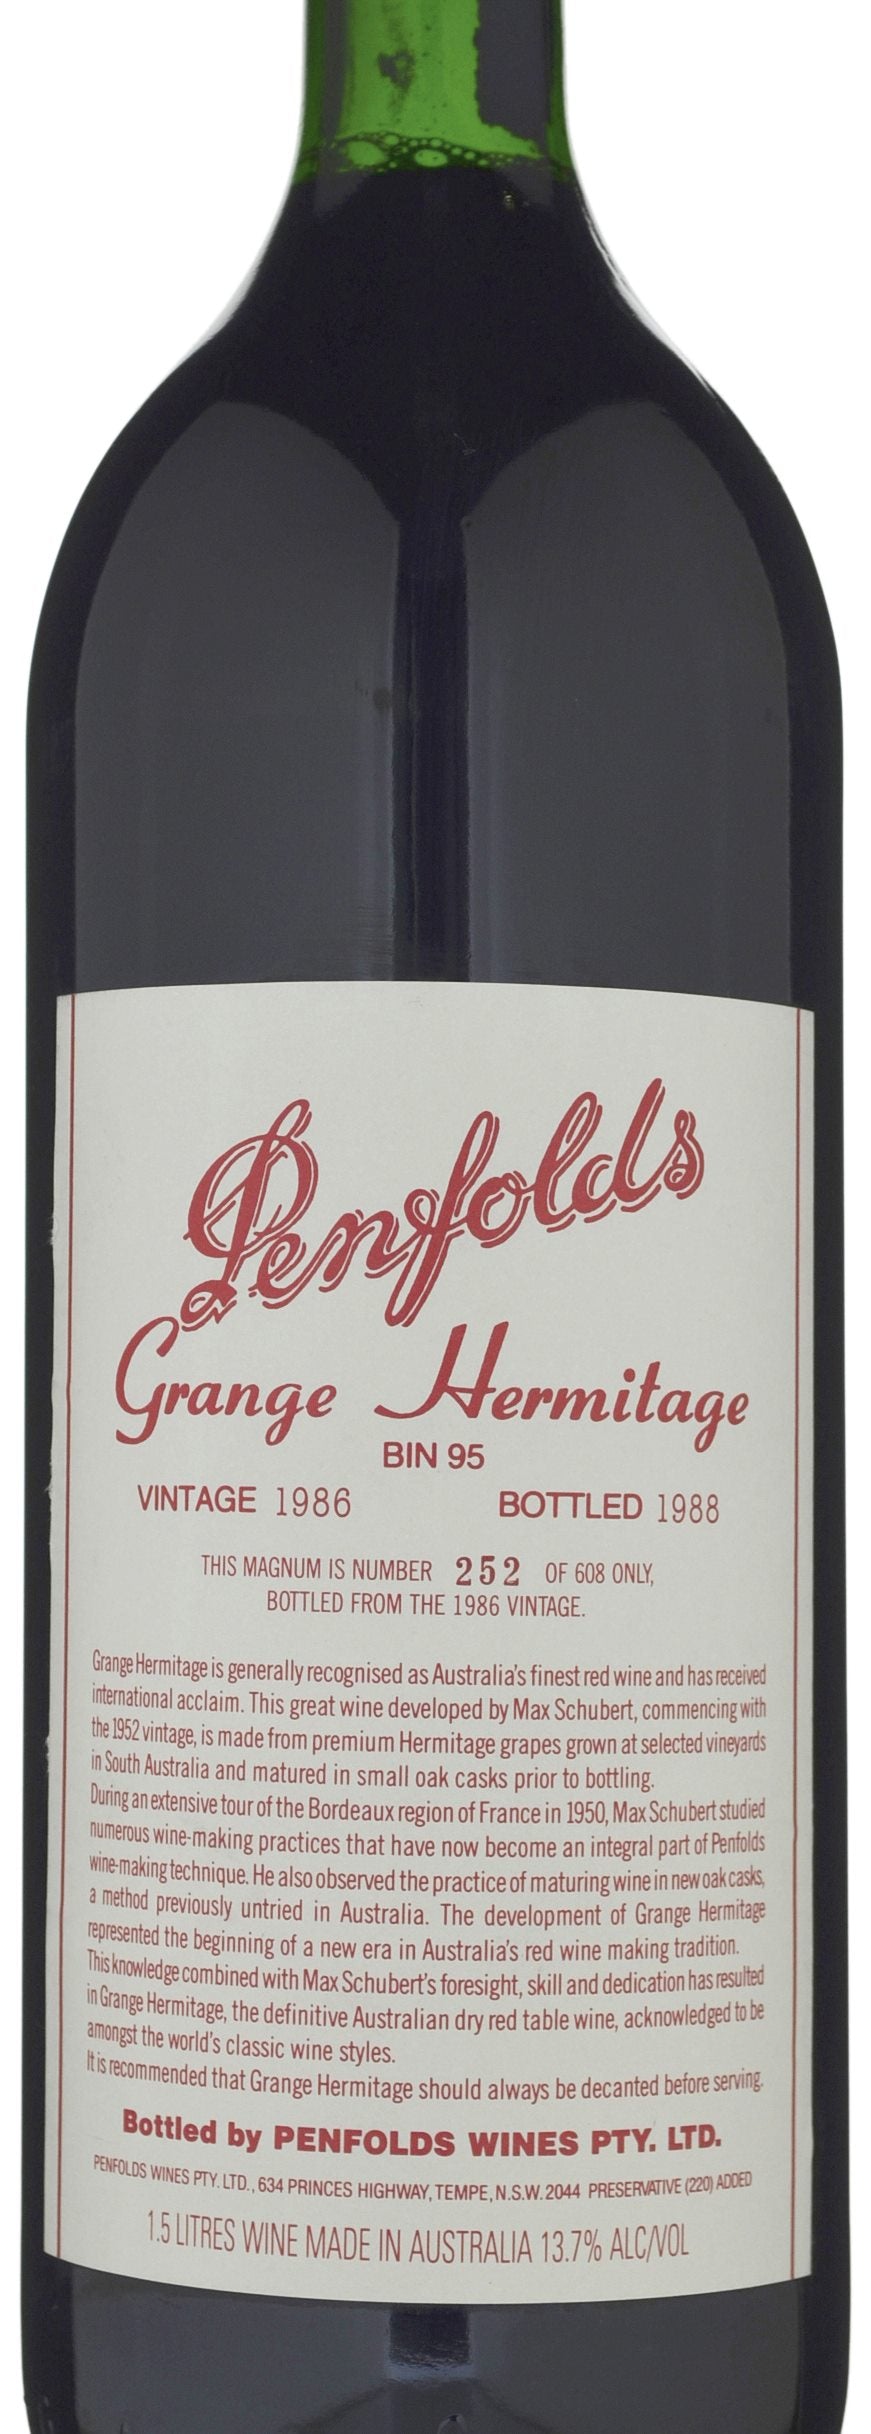 Penfolds Grange Shiraz 1986